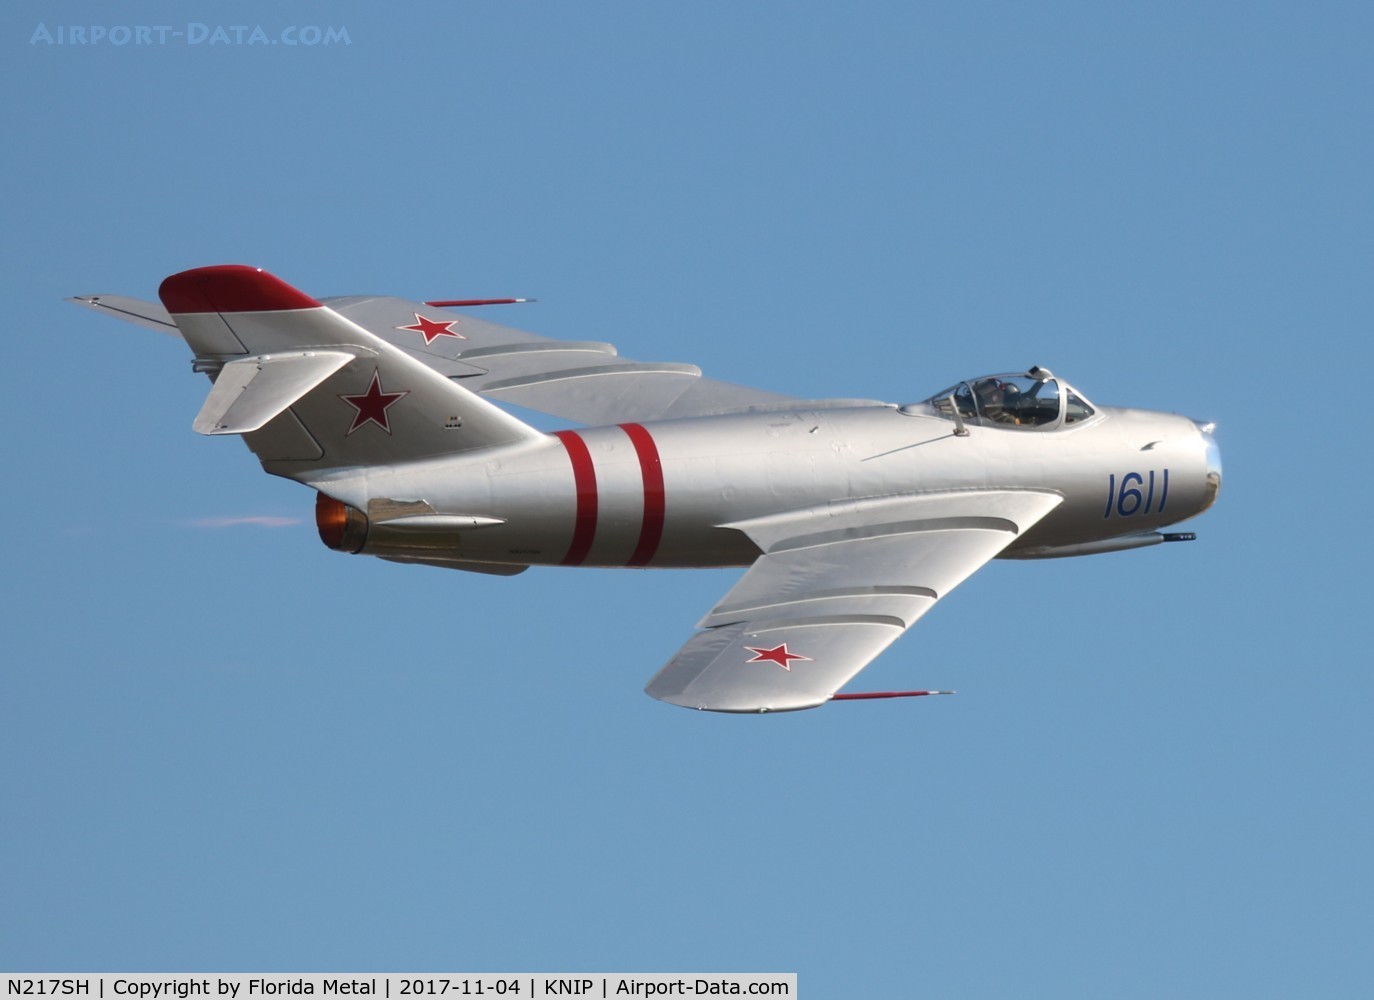 N217SH, 1959 PZL-Mielec Lim-5 (MiG-17F) C/N 1C1611, Mig-17 zx